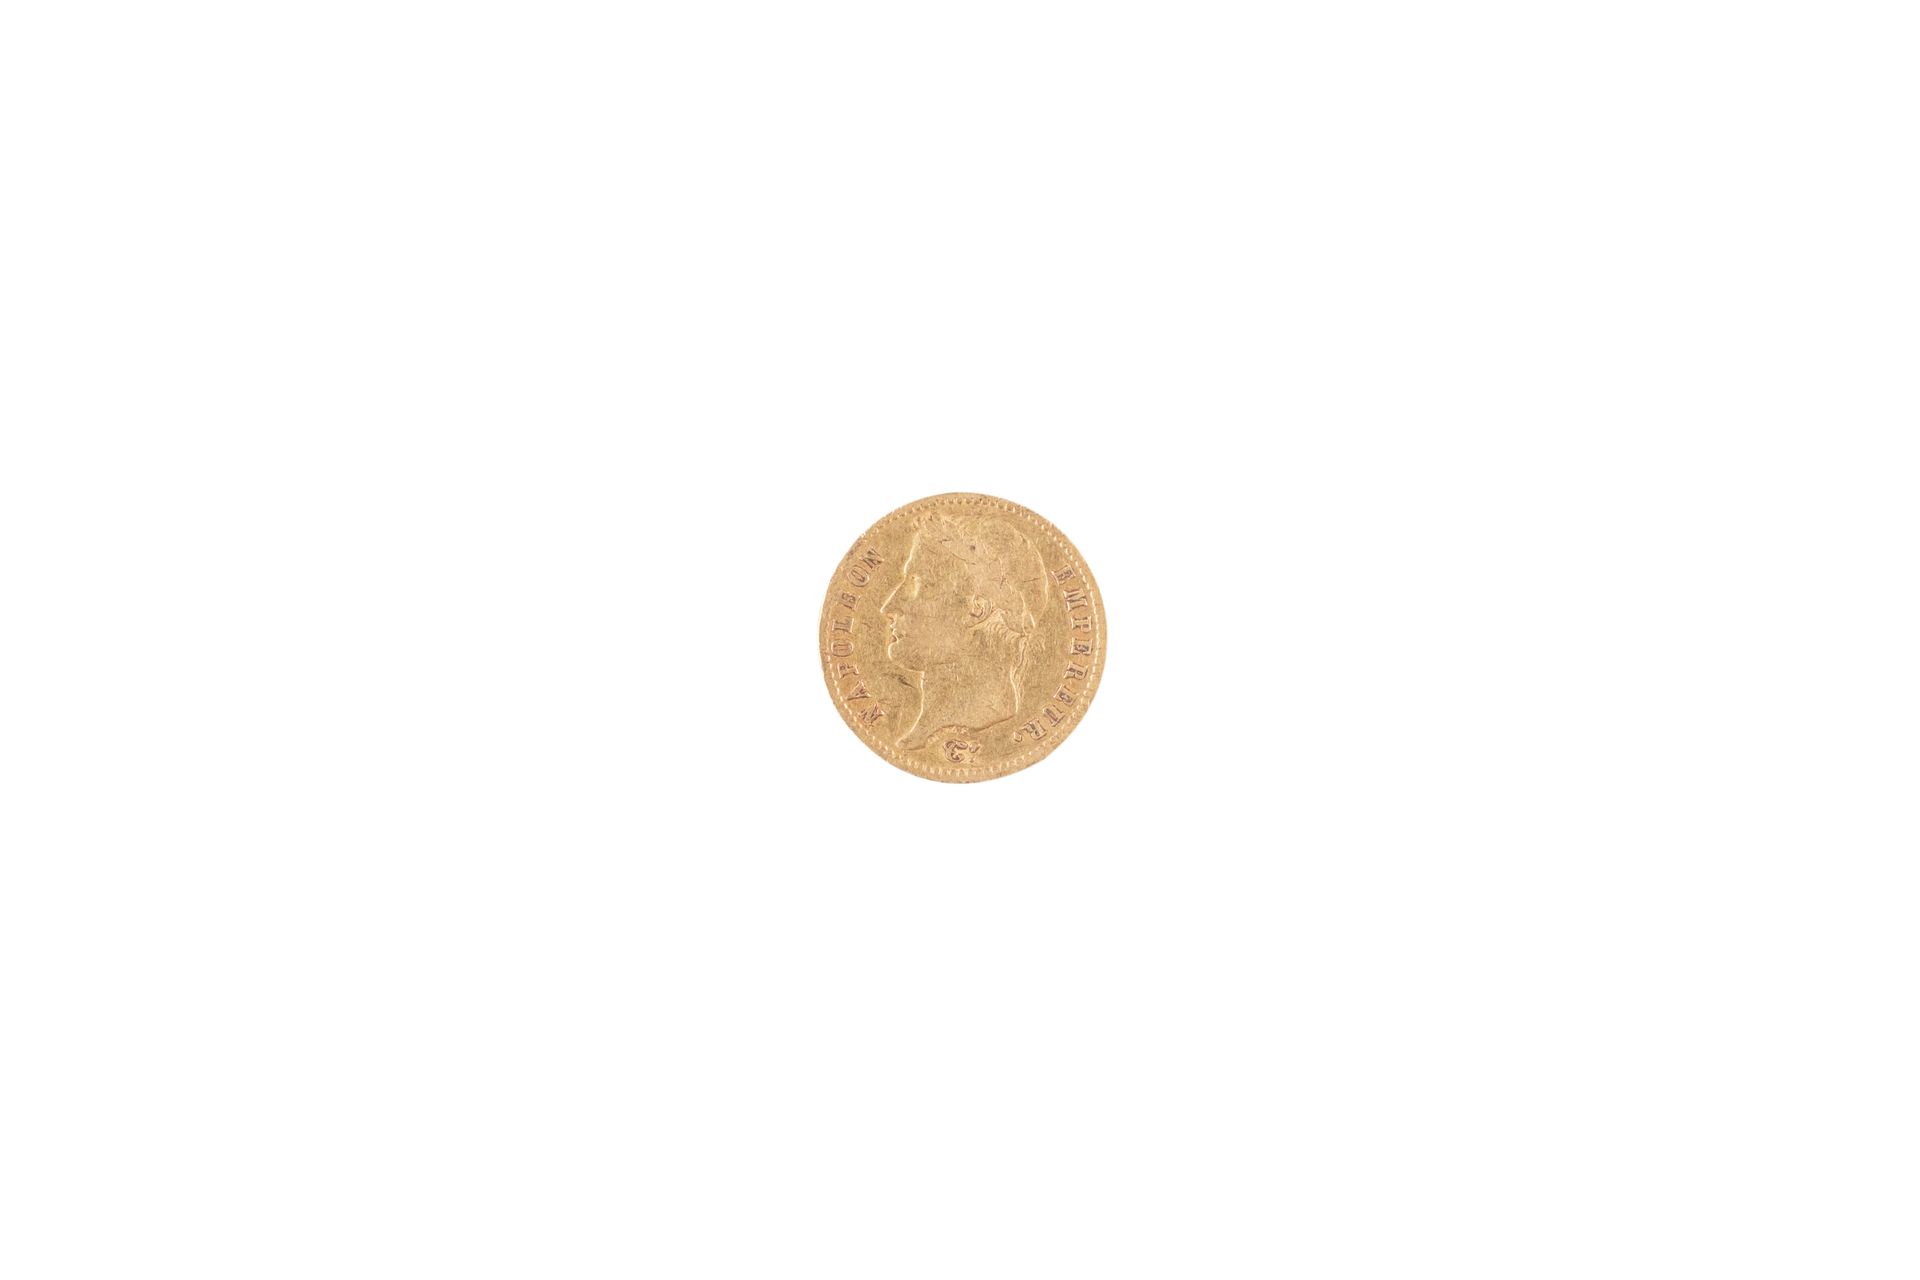 Null 20 Goldfranken 1810 A Paris, 6,38 gr. G. 1025

TTB